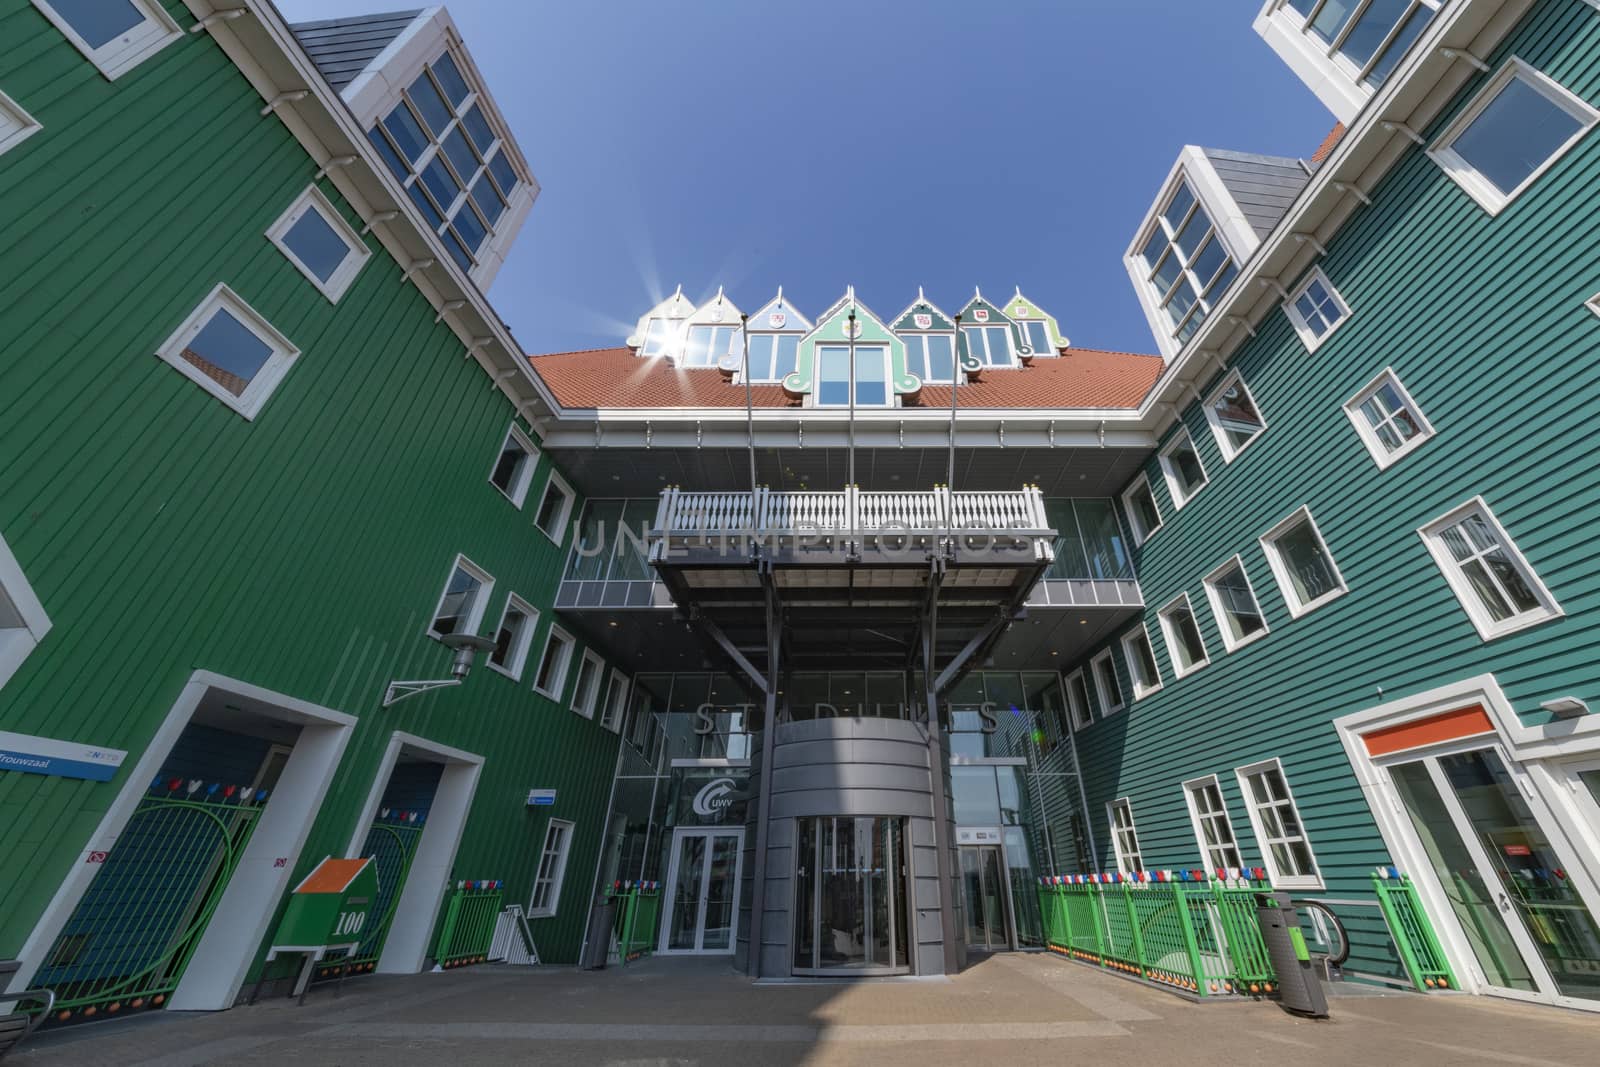 ZAANDAM, 14 April 2019 - Front view of the green entrance and bulding of Zaandam city hall 